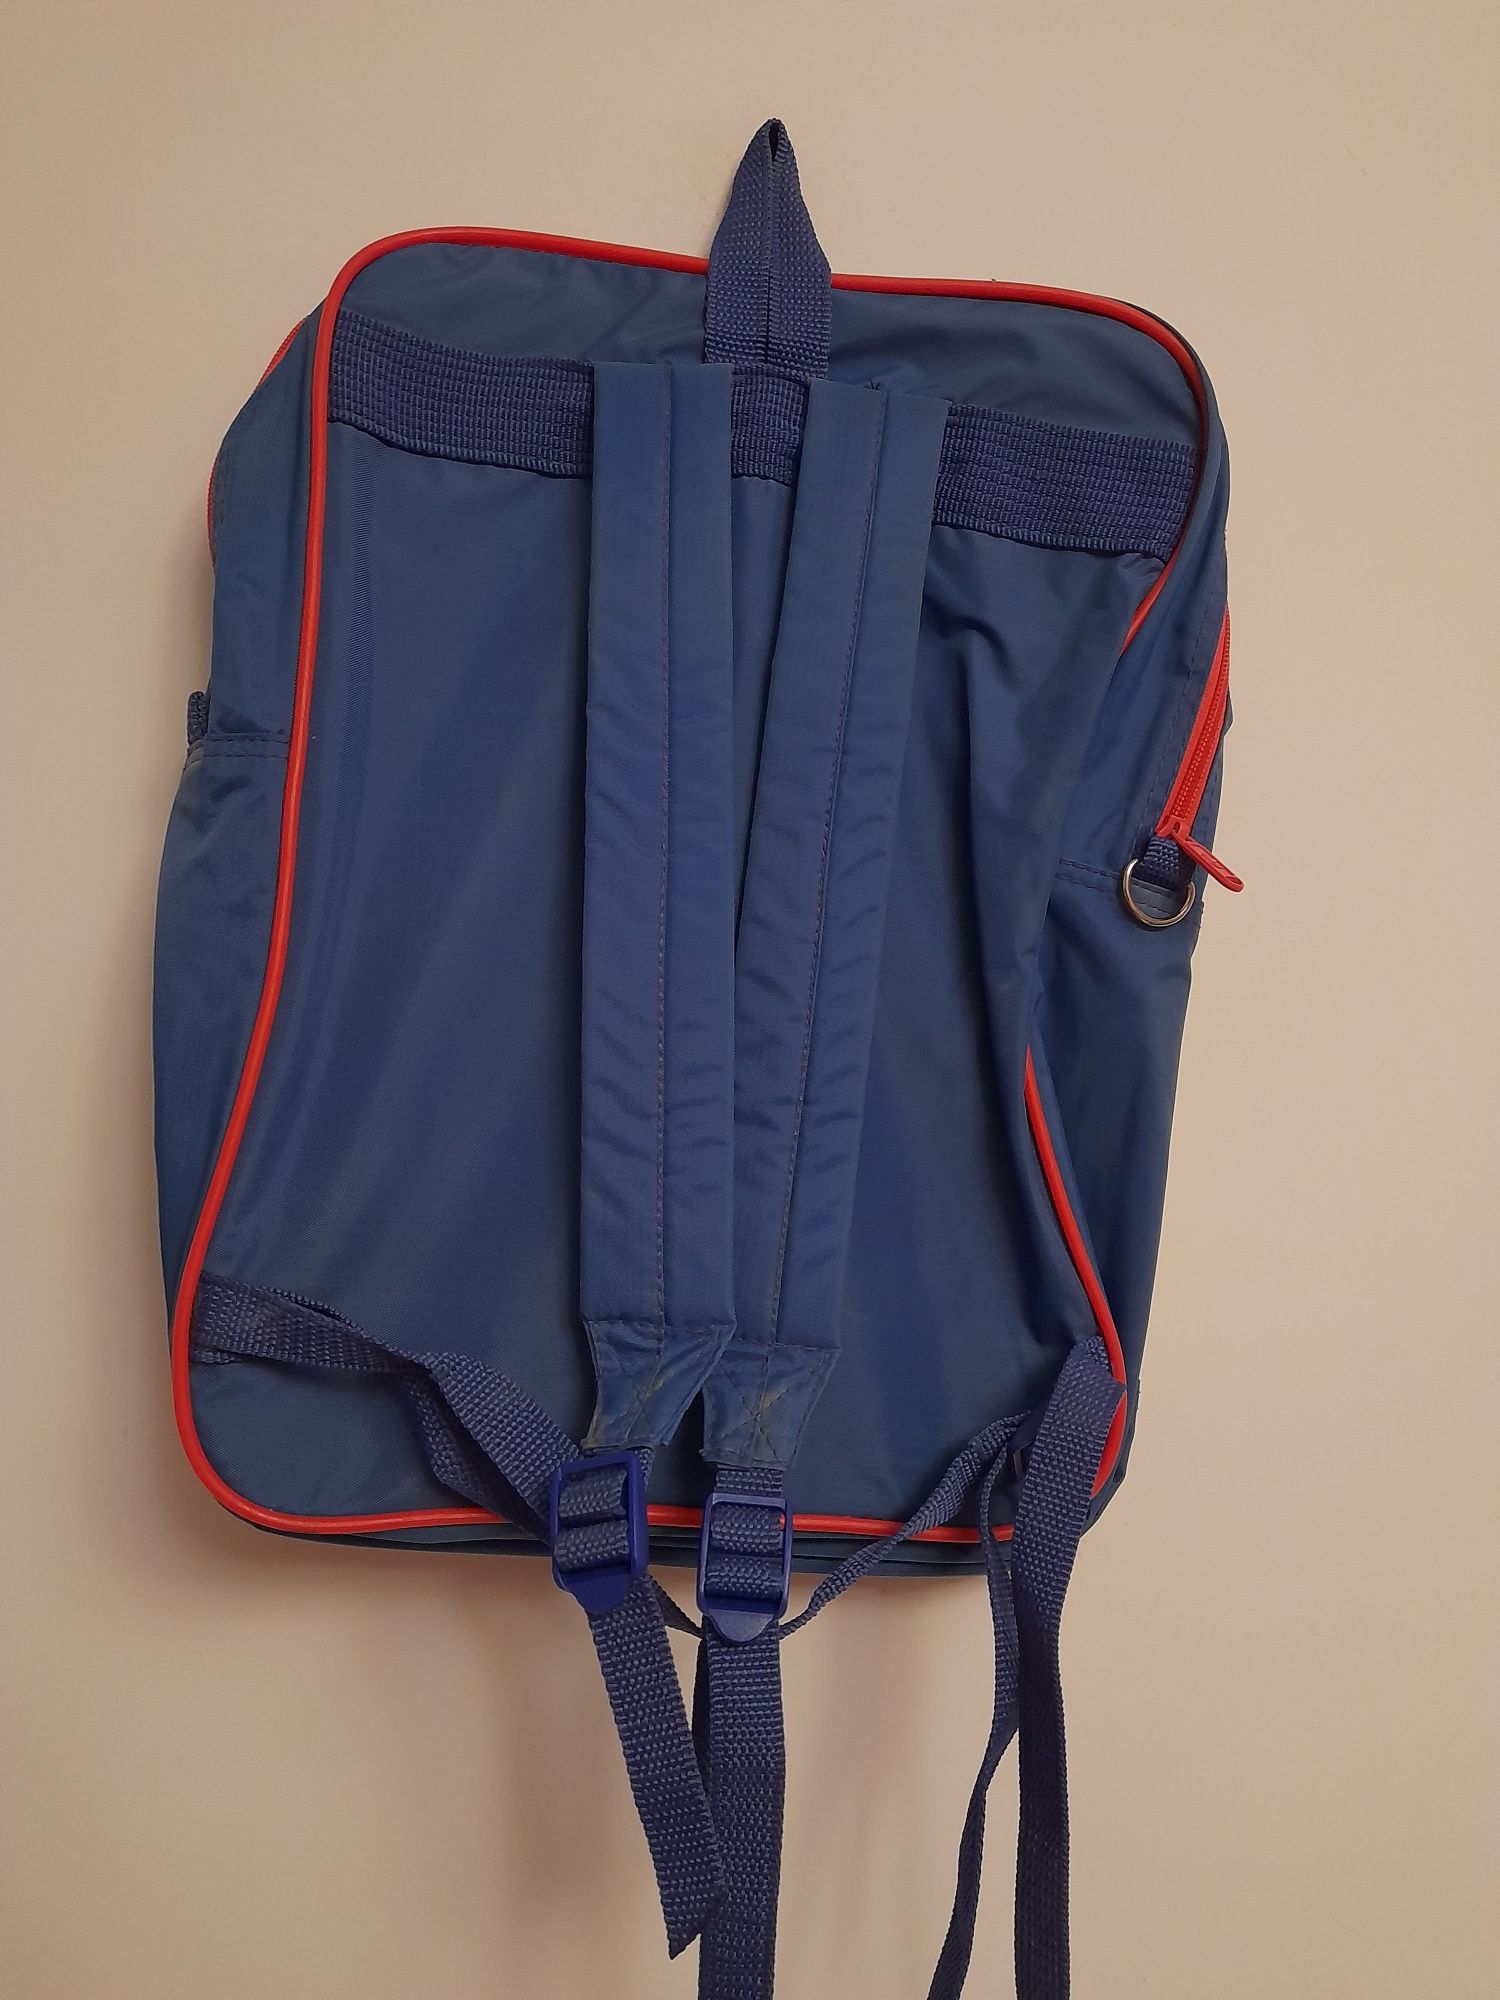 Оригинал винтажный рюкзак Adidas West Germany рюкзак